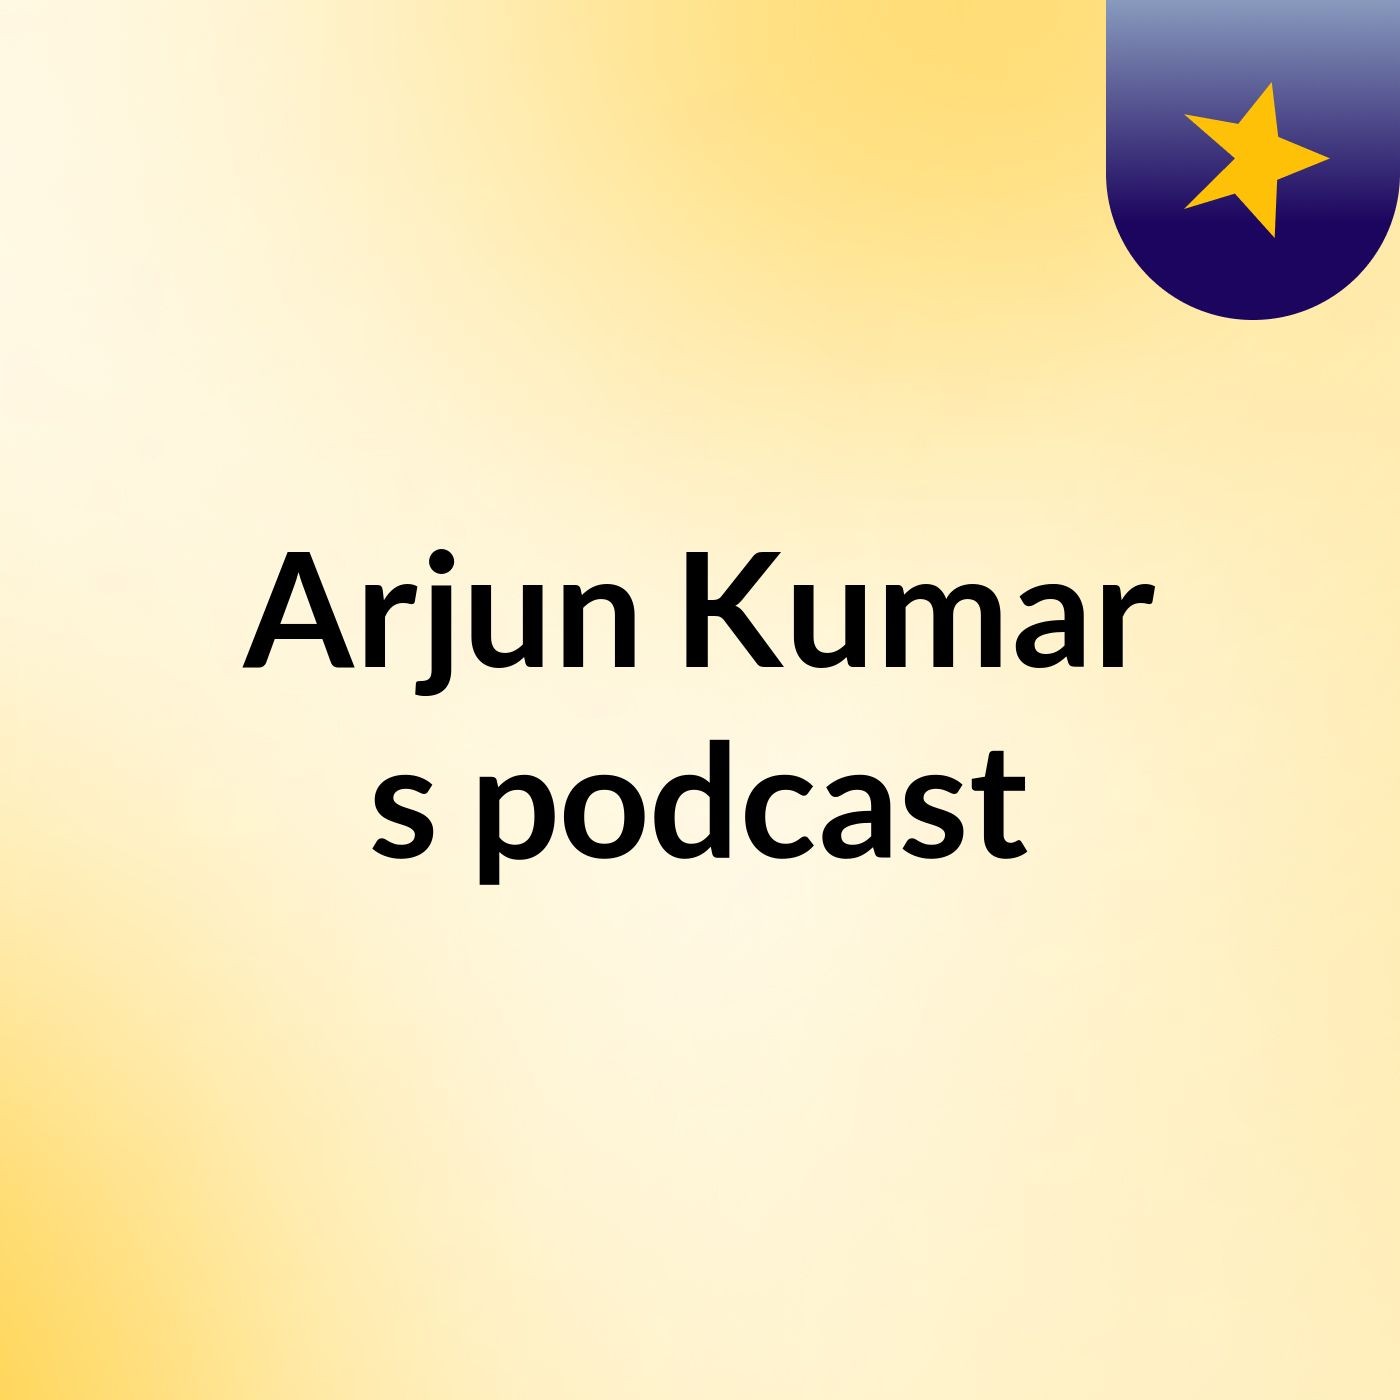 Arjun Kumar's podcast